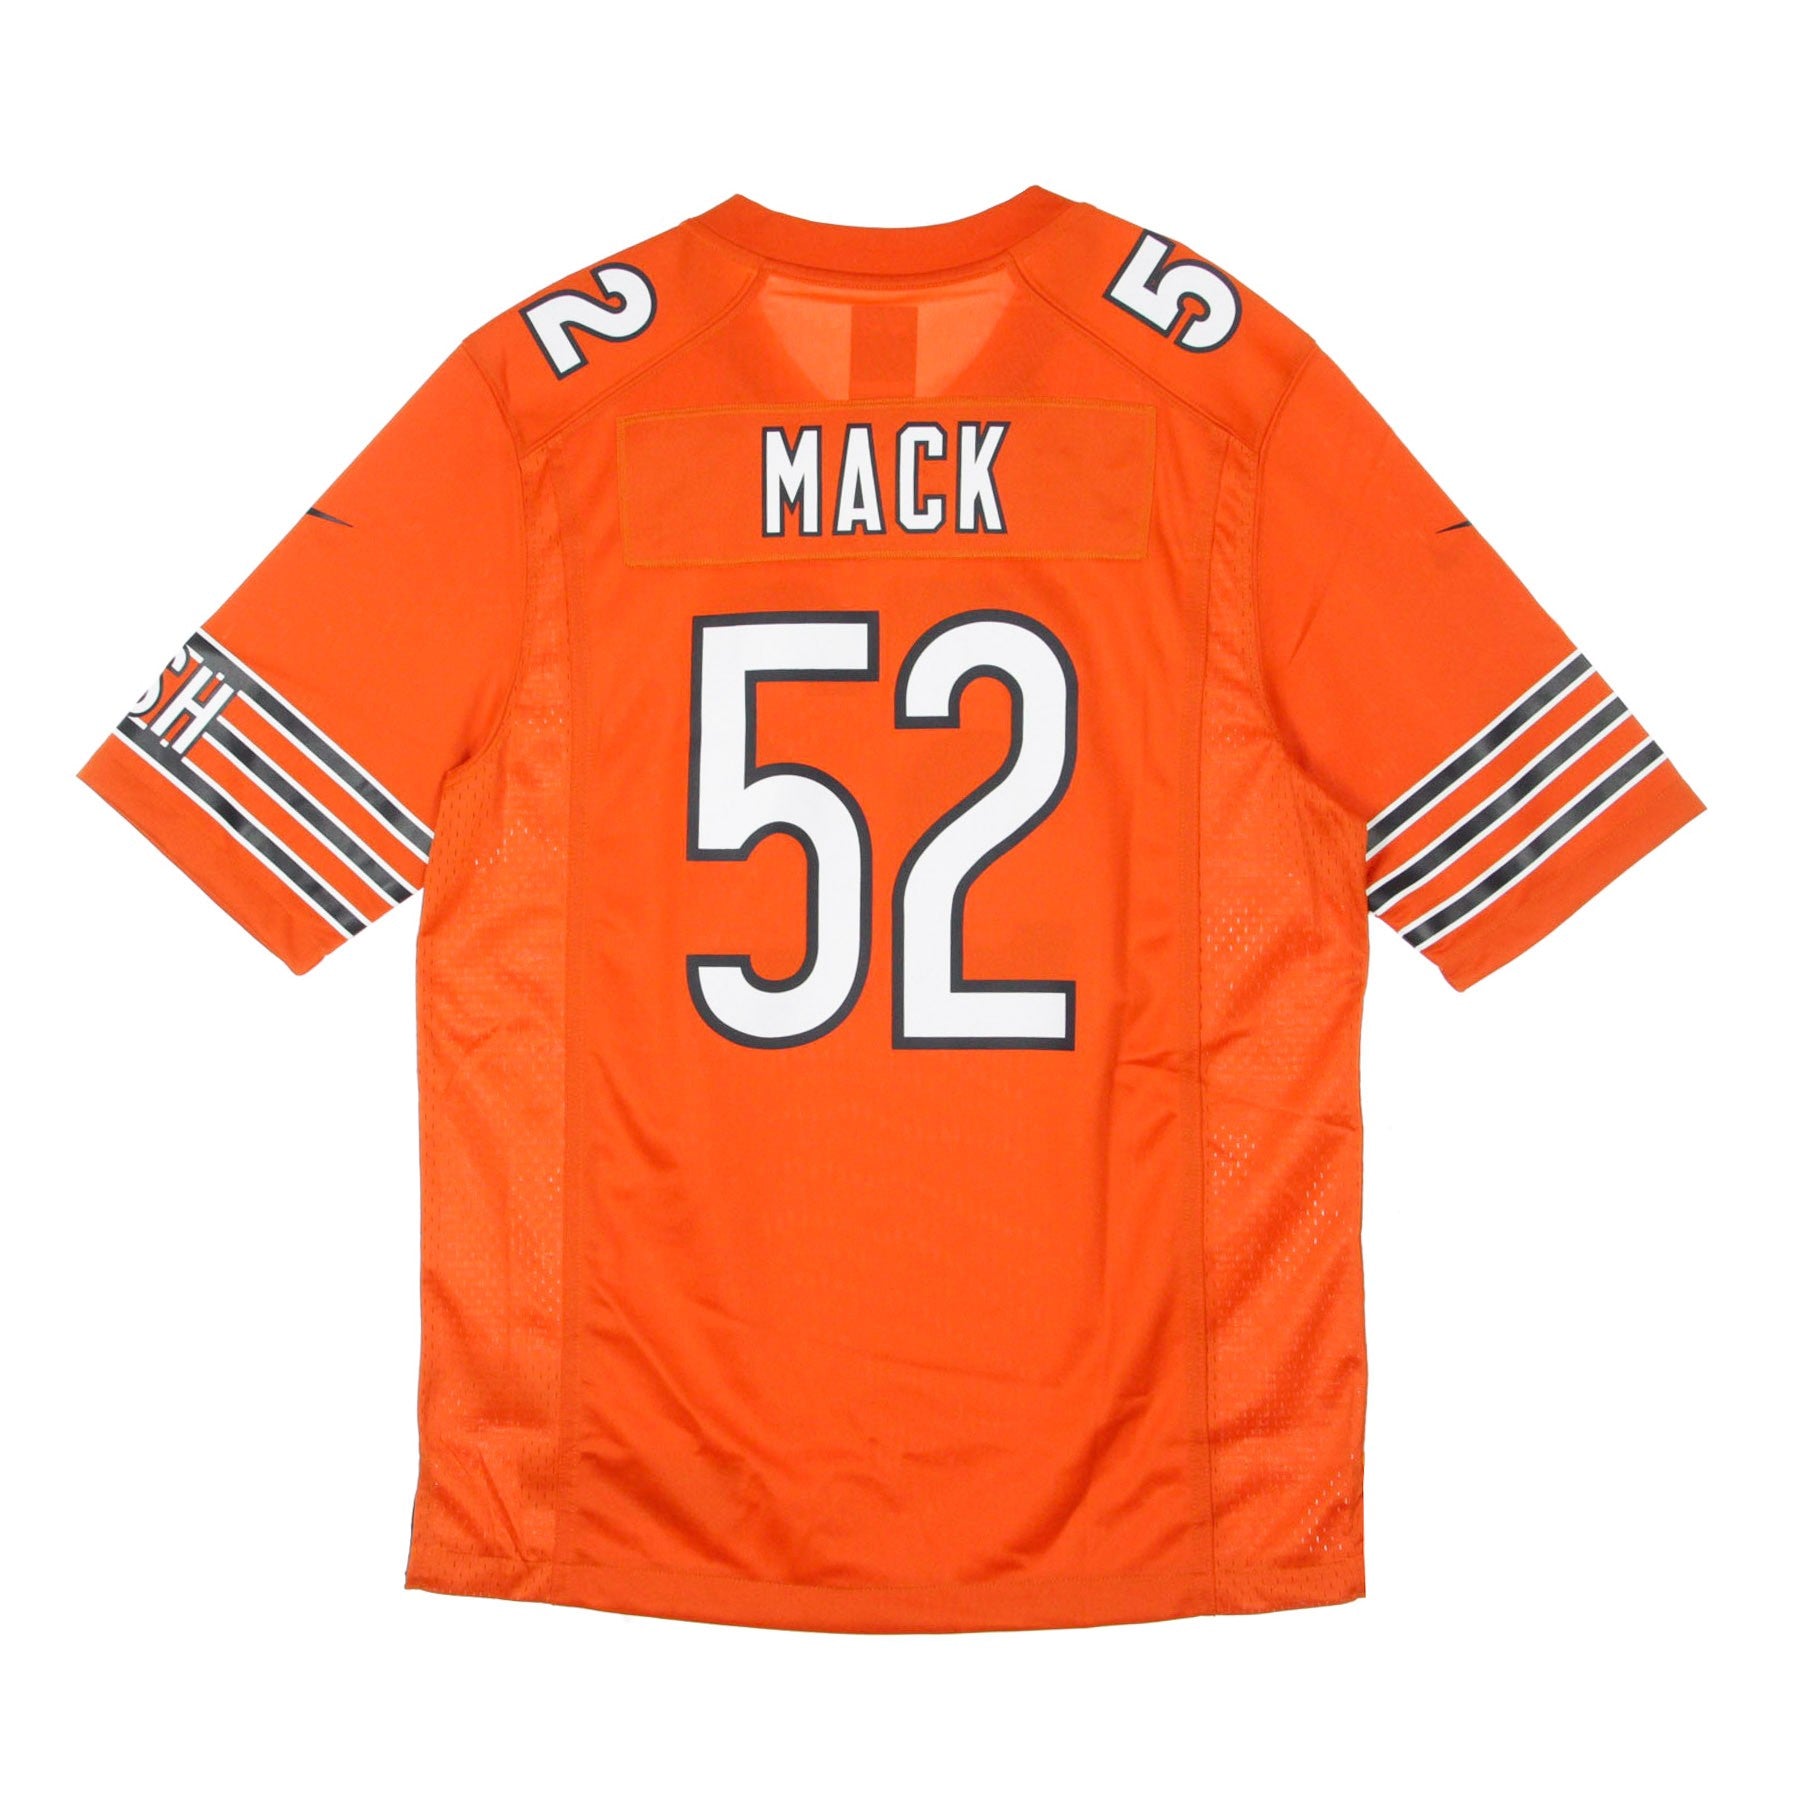 American Football Jacket Men's NFL Game Alternate Jersey No.52 Mack Chibea Original Team Colors